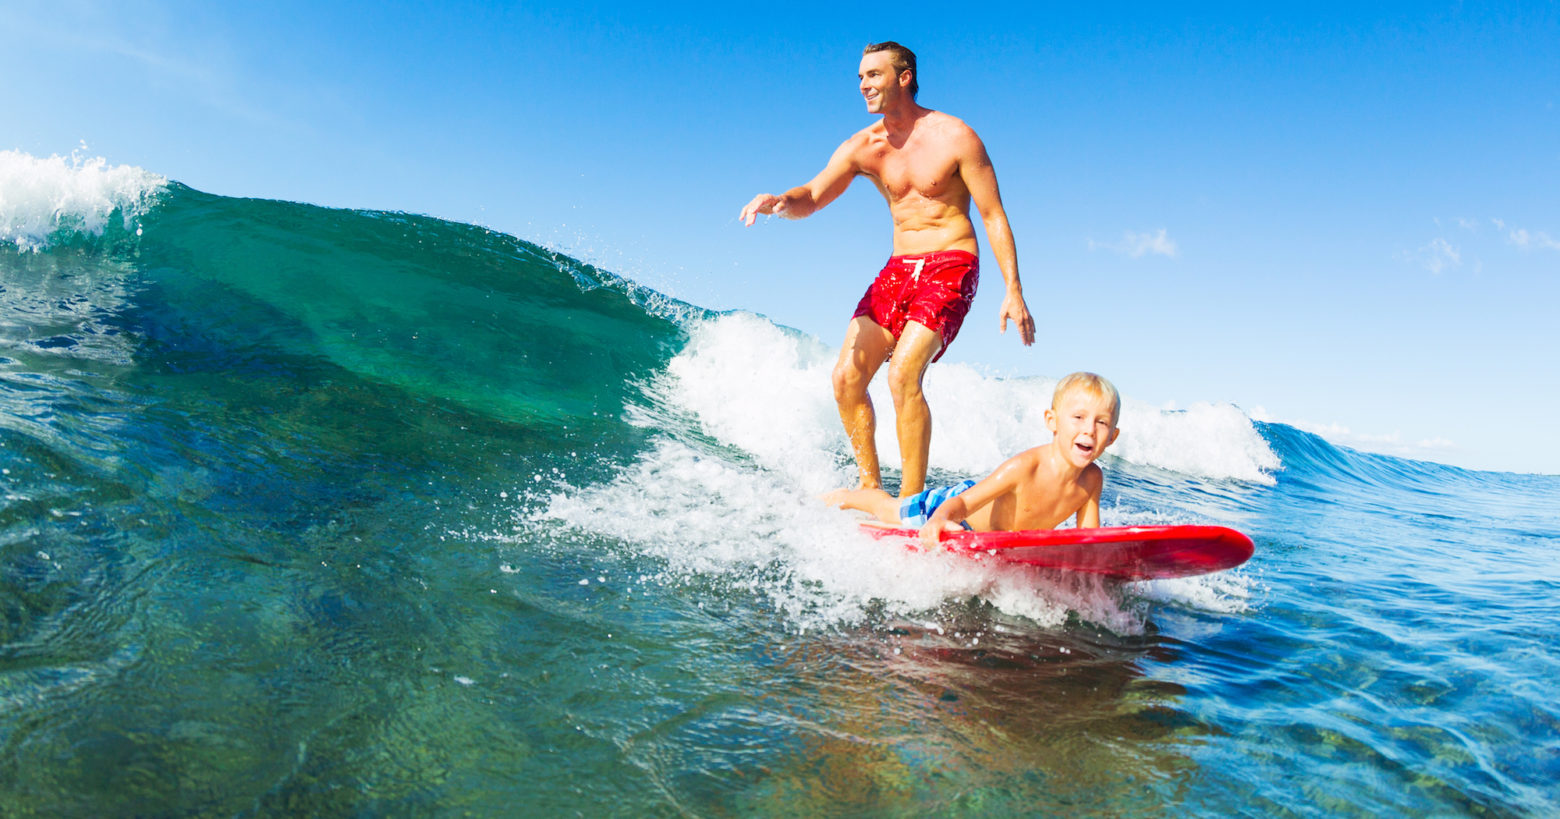 Santa Cruz Beach Surfing In Cali Men's Tee Image by Shutterstock 